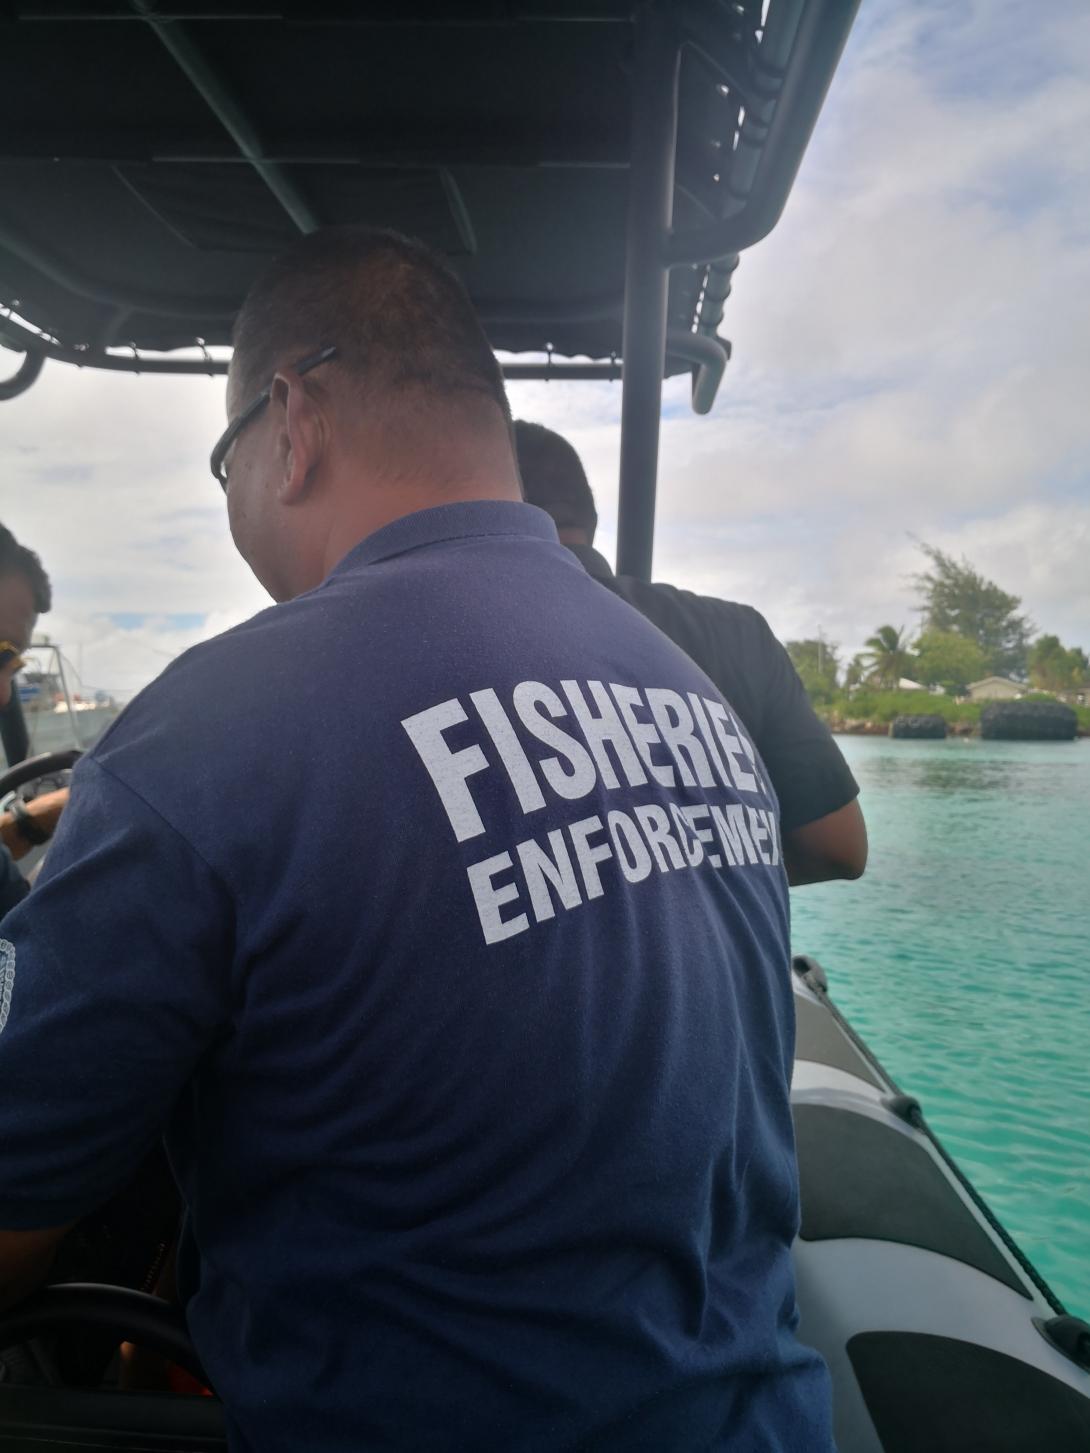 RMI fisheries enforcement officer on vessel